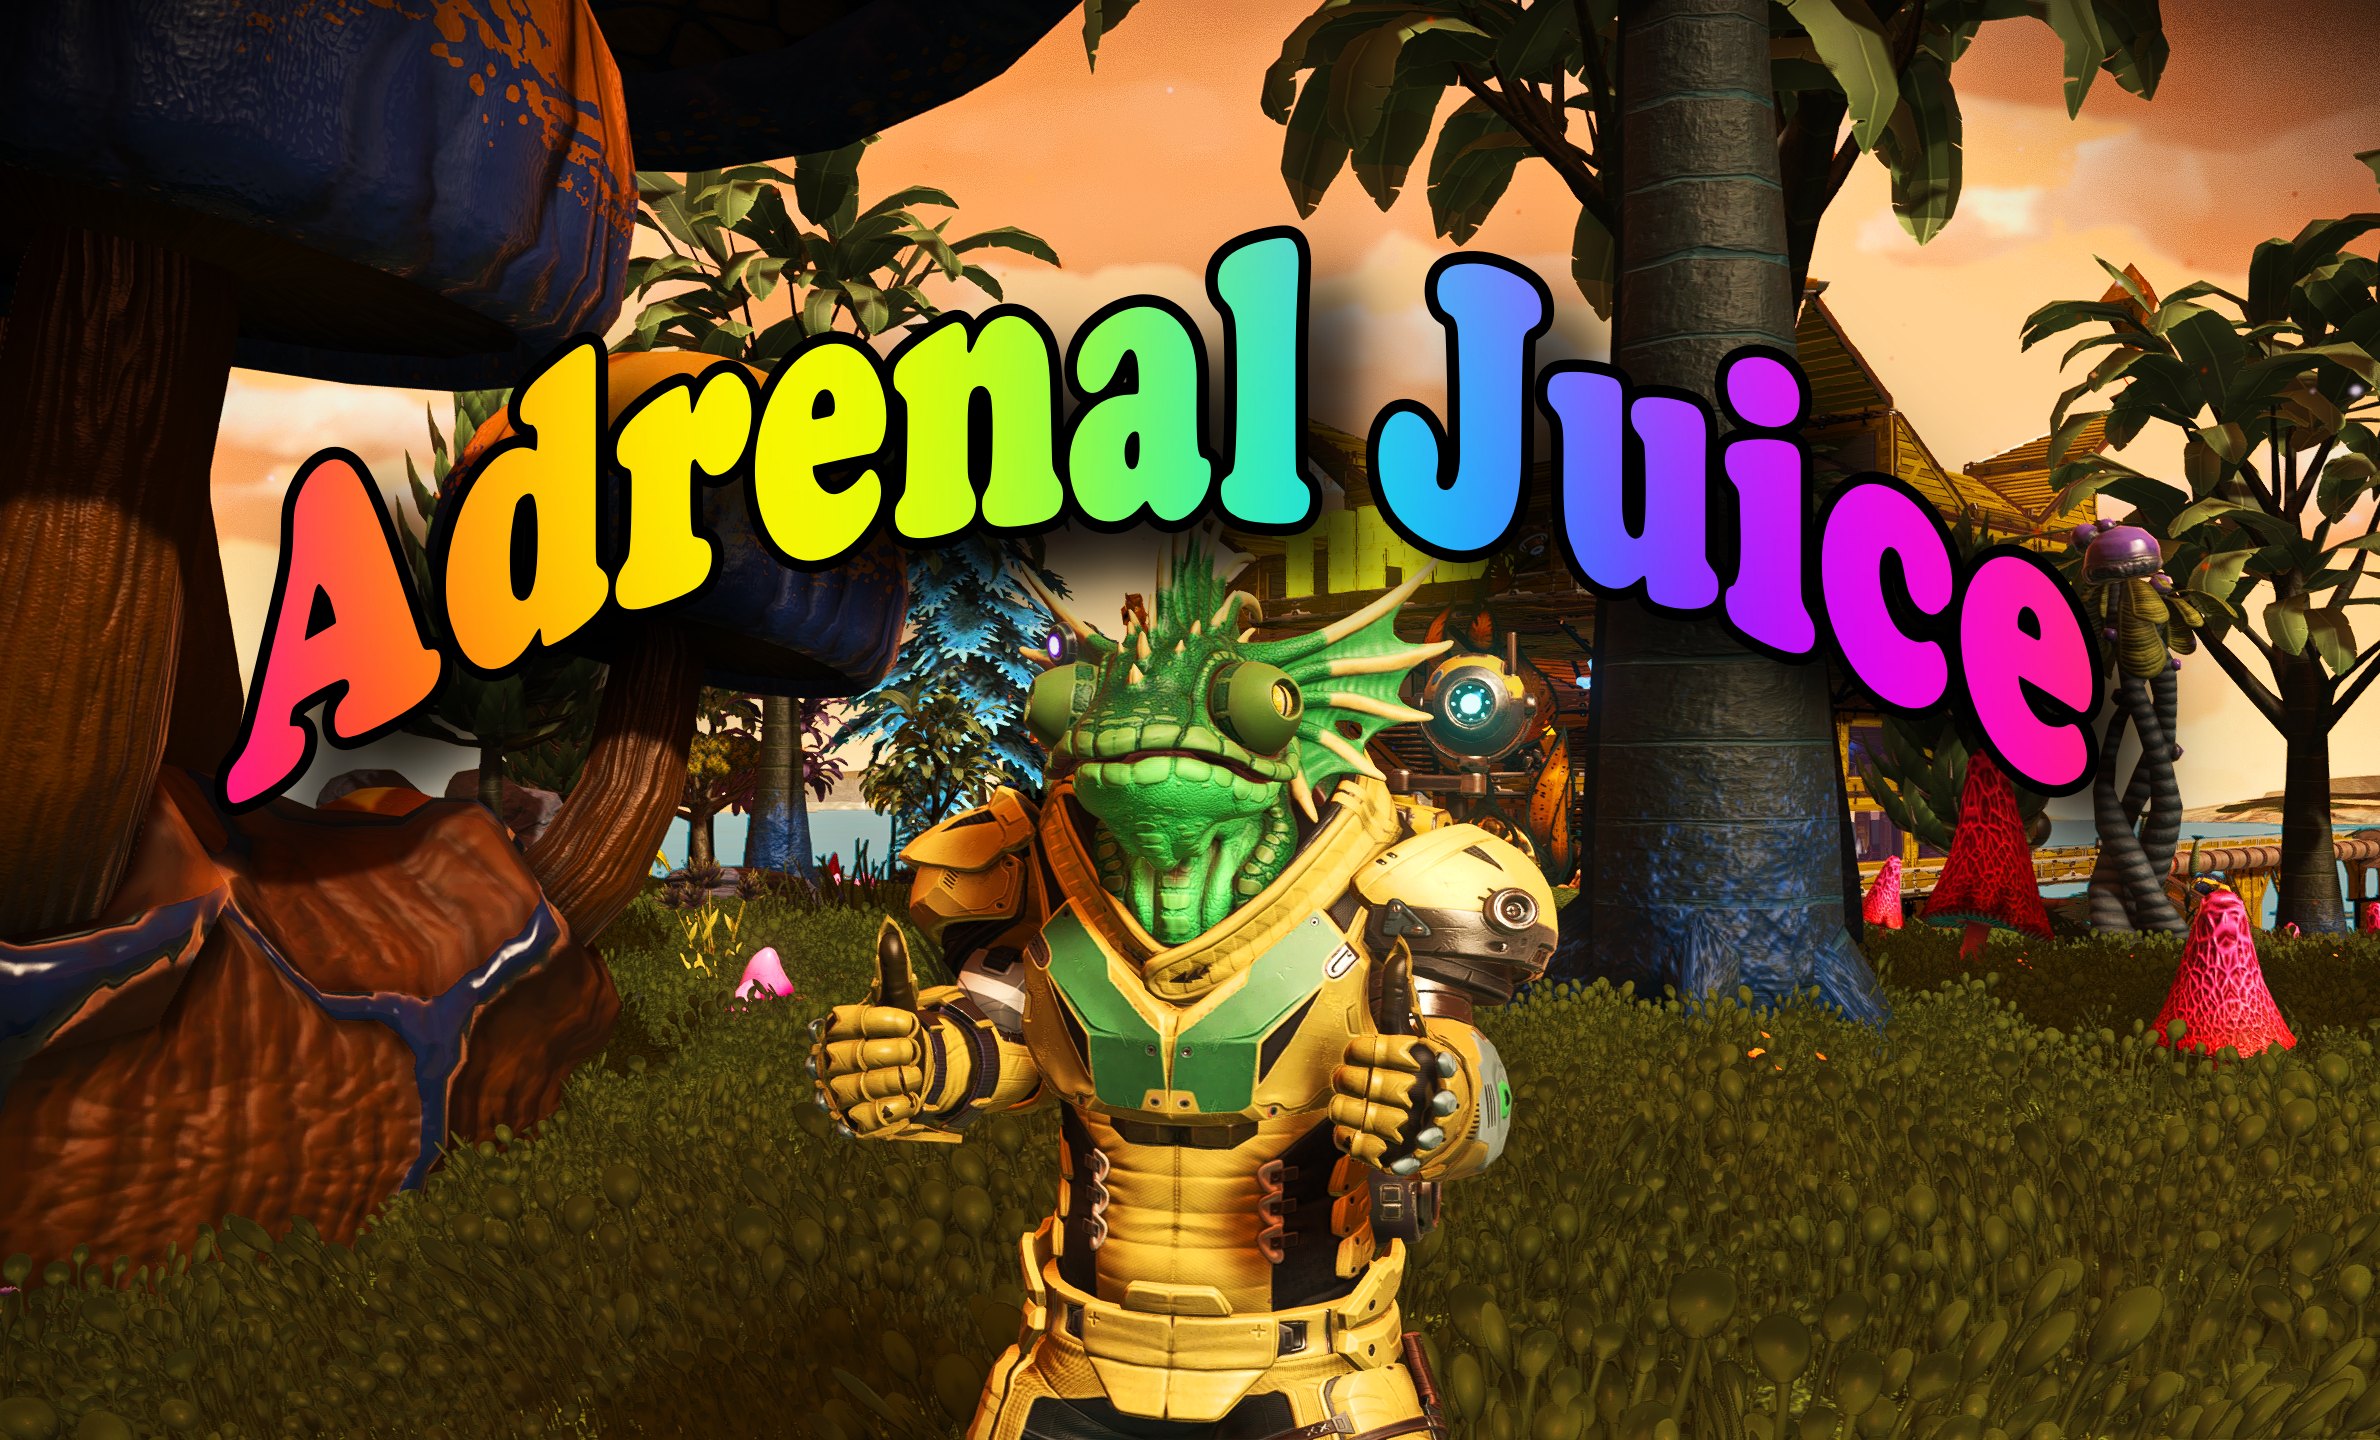 Adrenal Juice